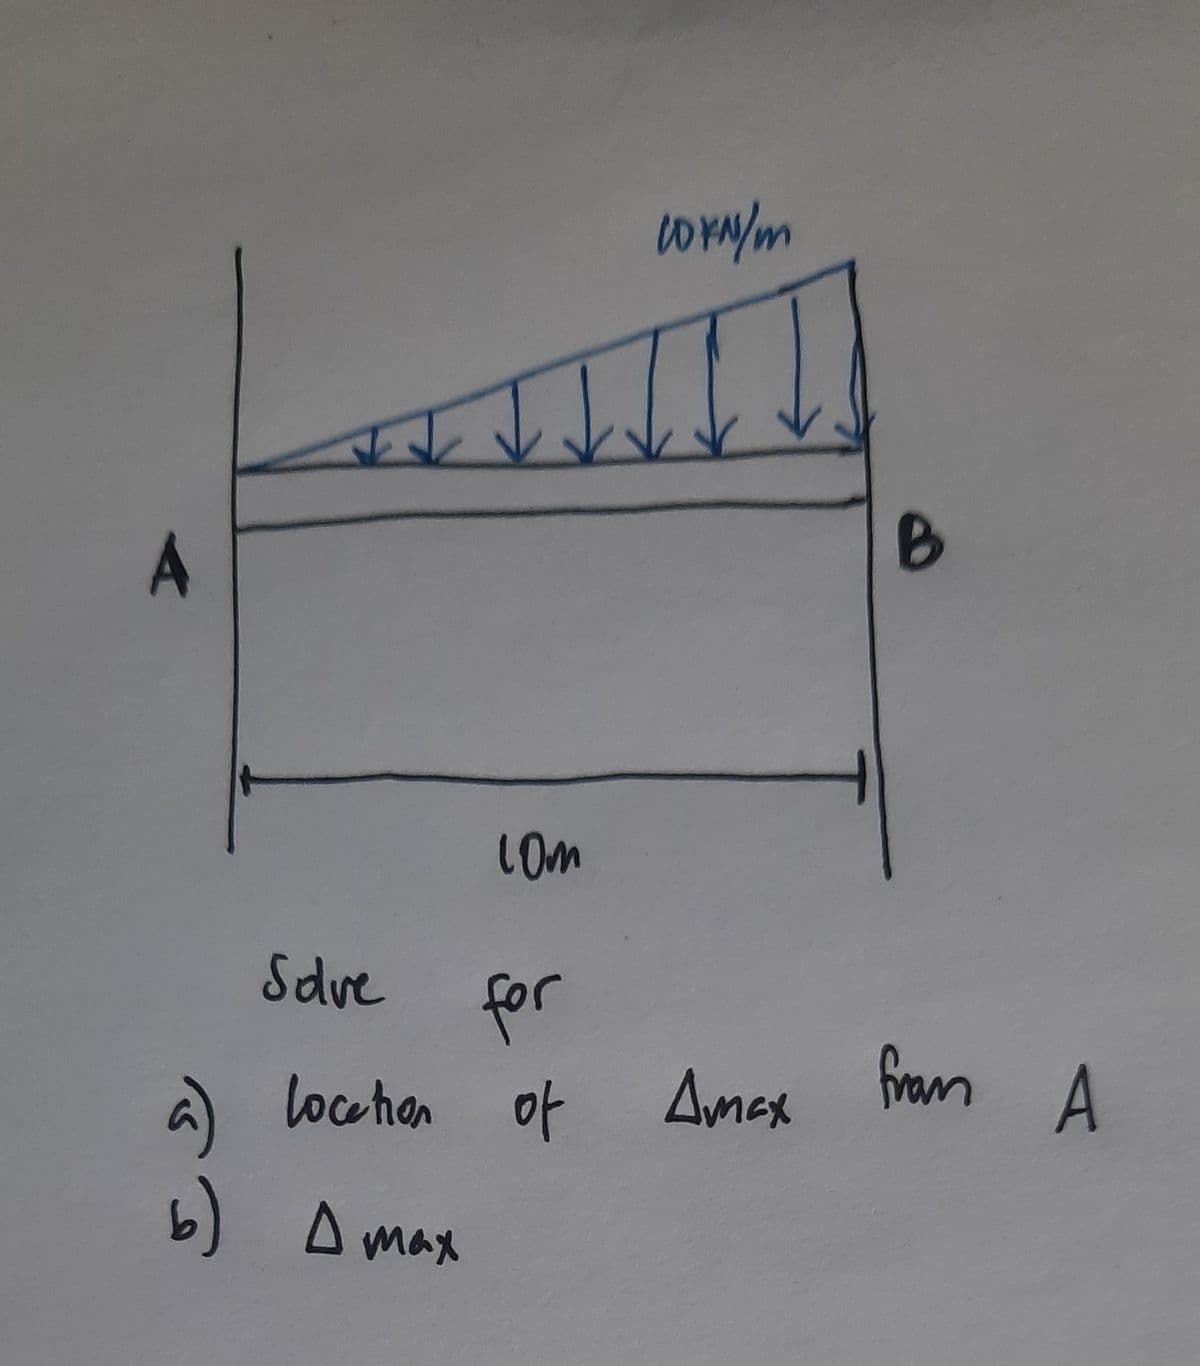 A
Lom
Sdve
for
Amex
fram
a)
locehion of
b) A max
